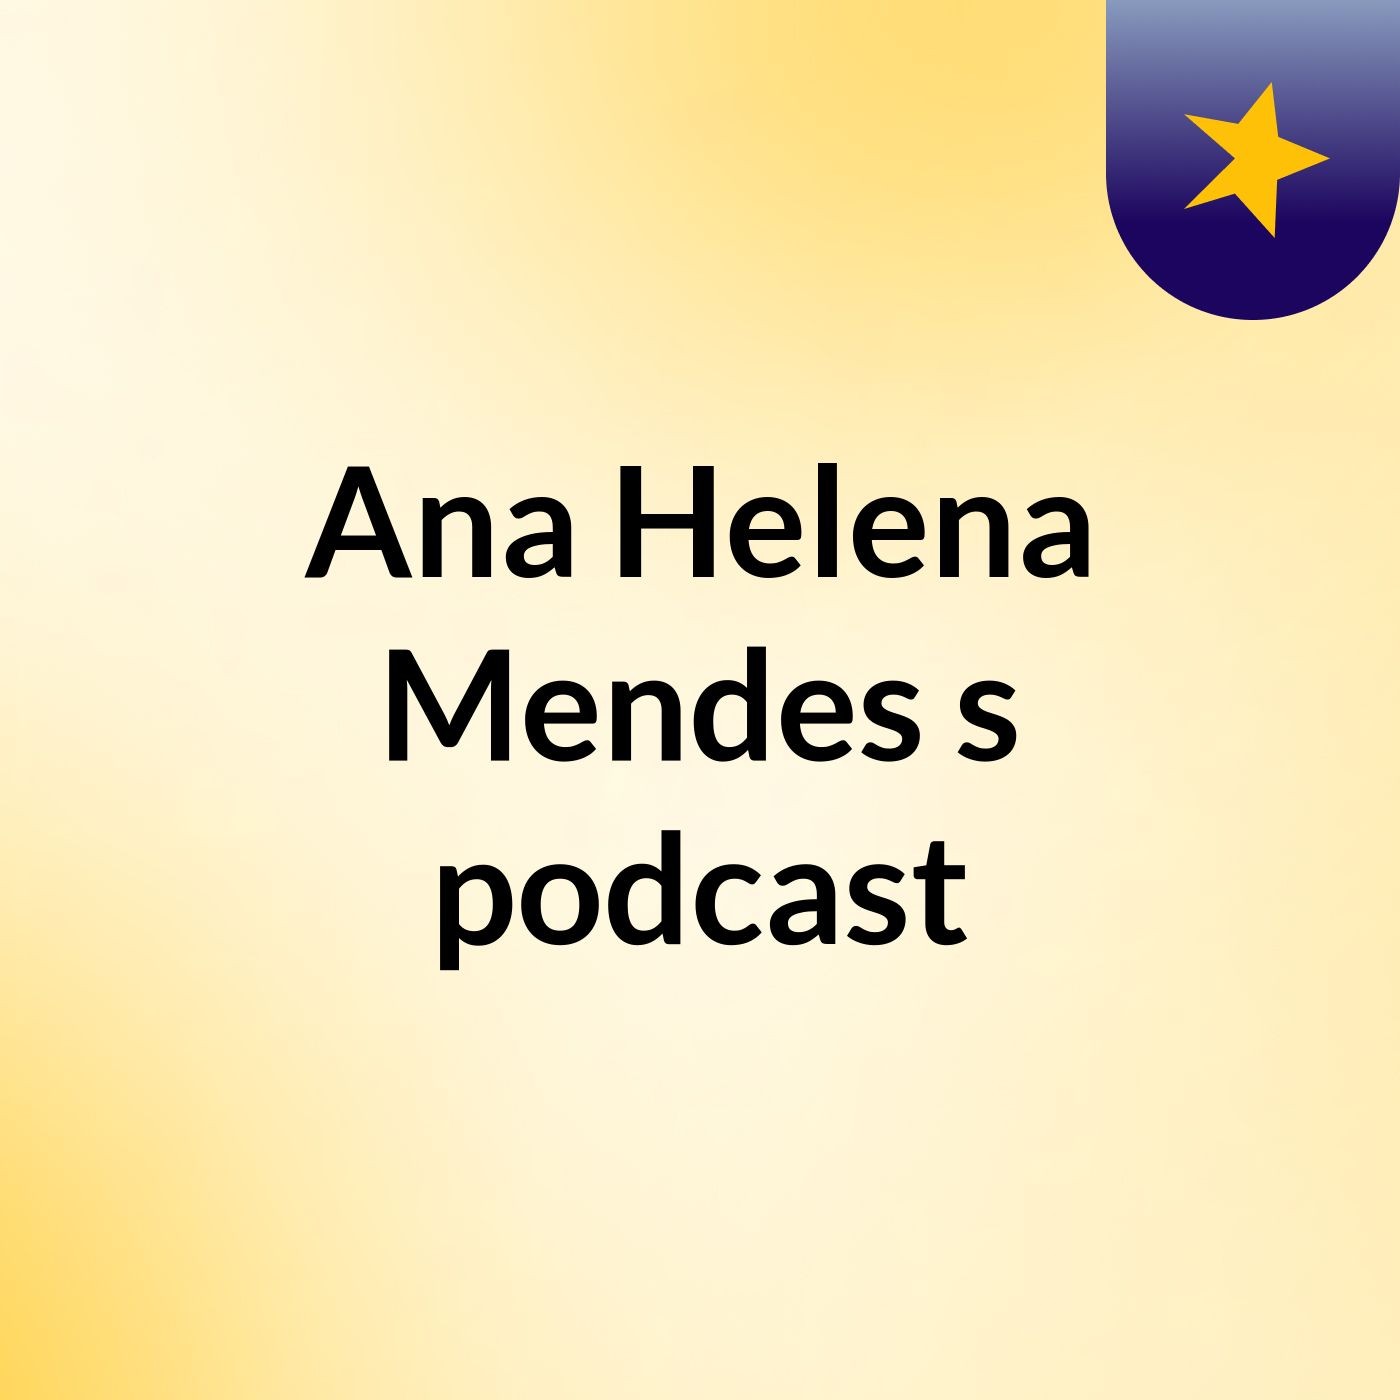 Ana Helena Mendes's podcast